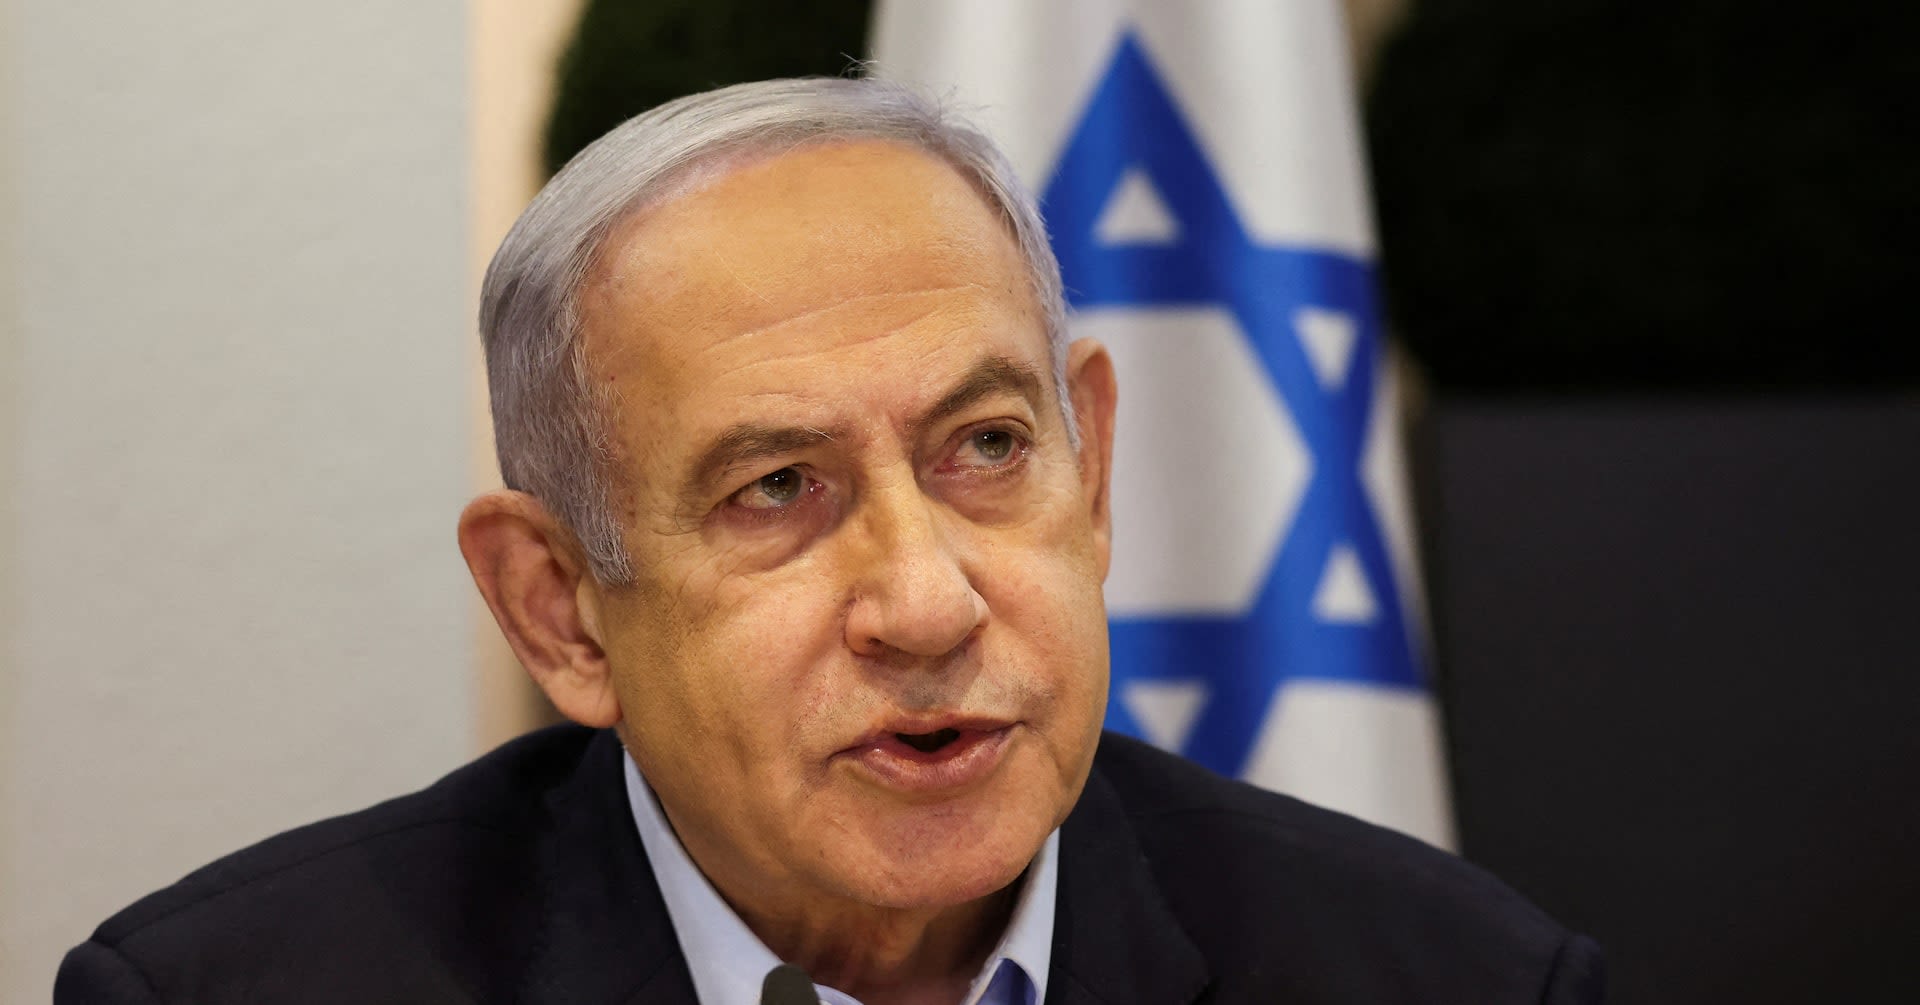 Netanyahu says ICC decisions will not affect Israel's actions, set dangerous precedent